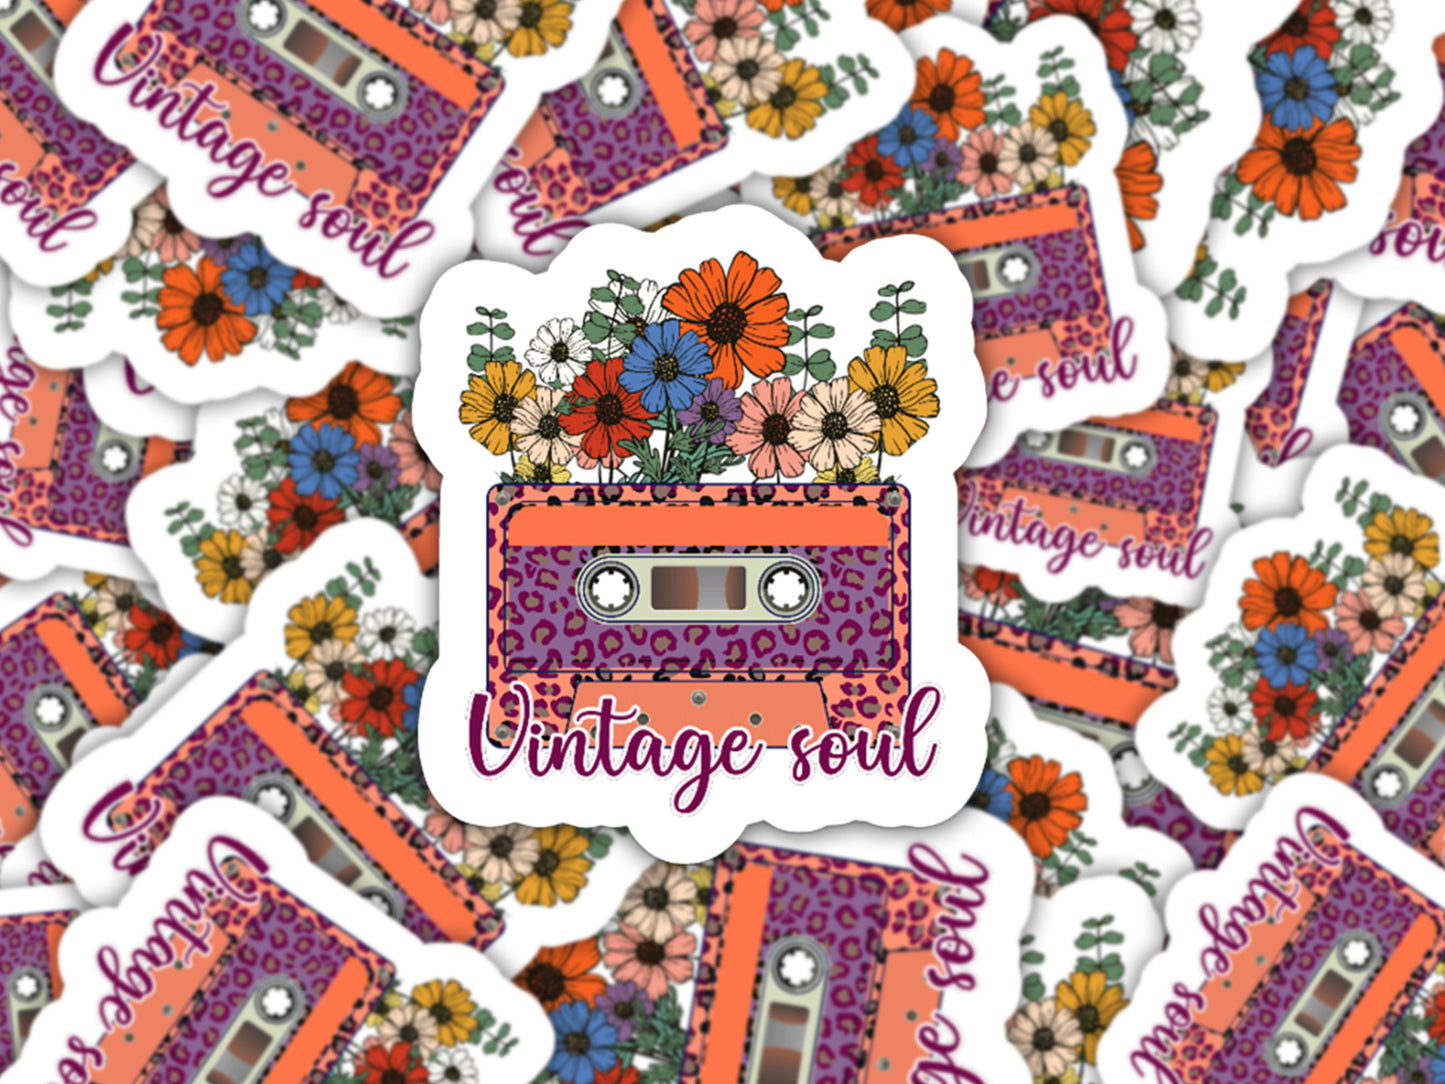 vintage soul sticker, flower stickers, cassette tape, throwback sticker, vintage sticker, cassette tape sticker, retro sticker, 80's sticker